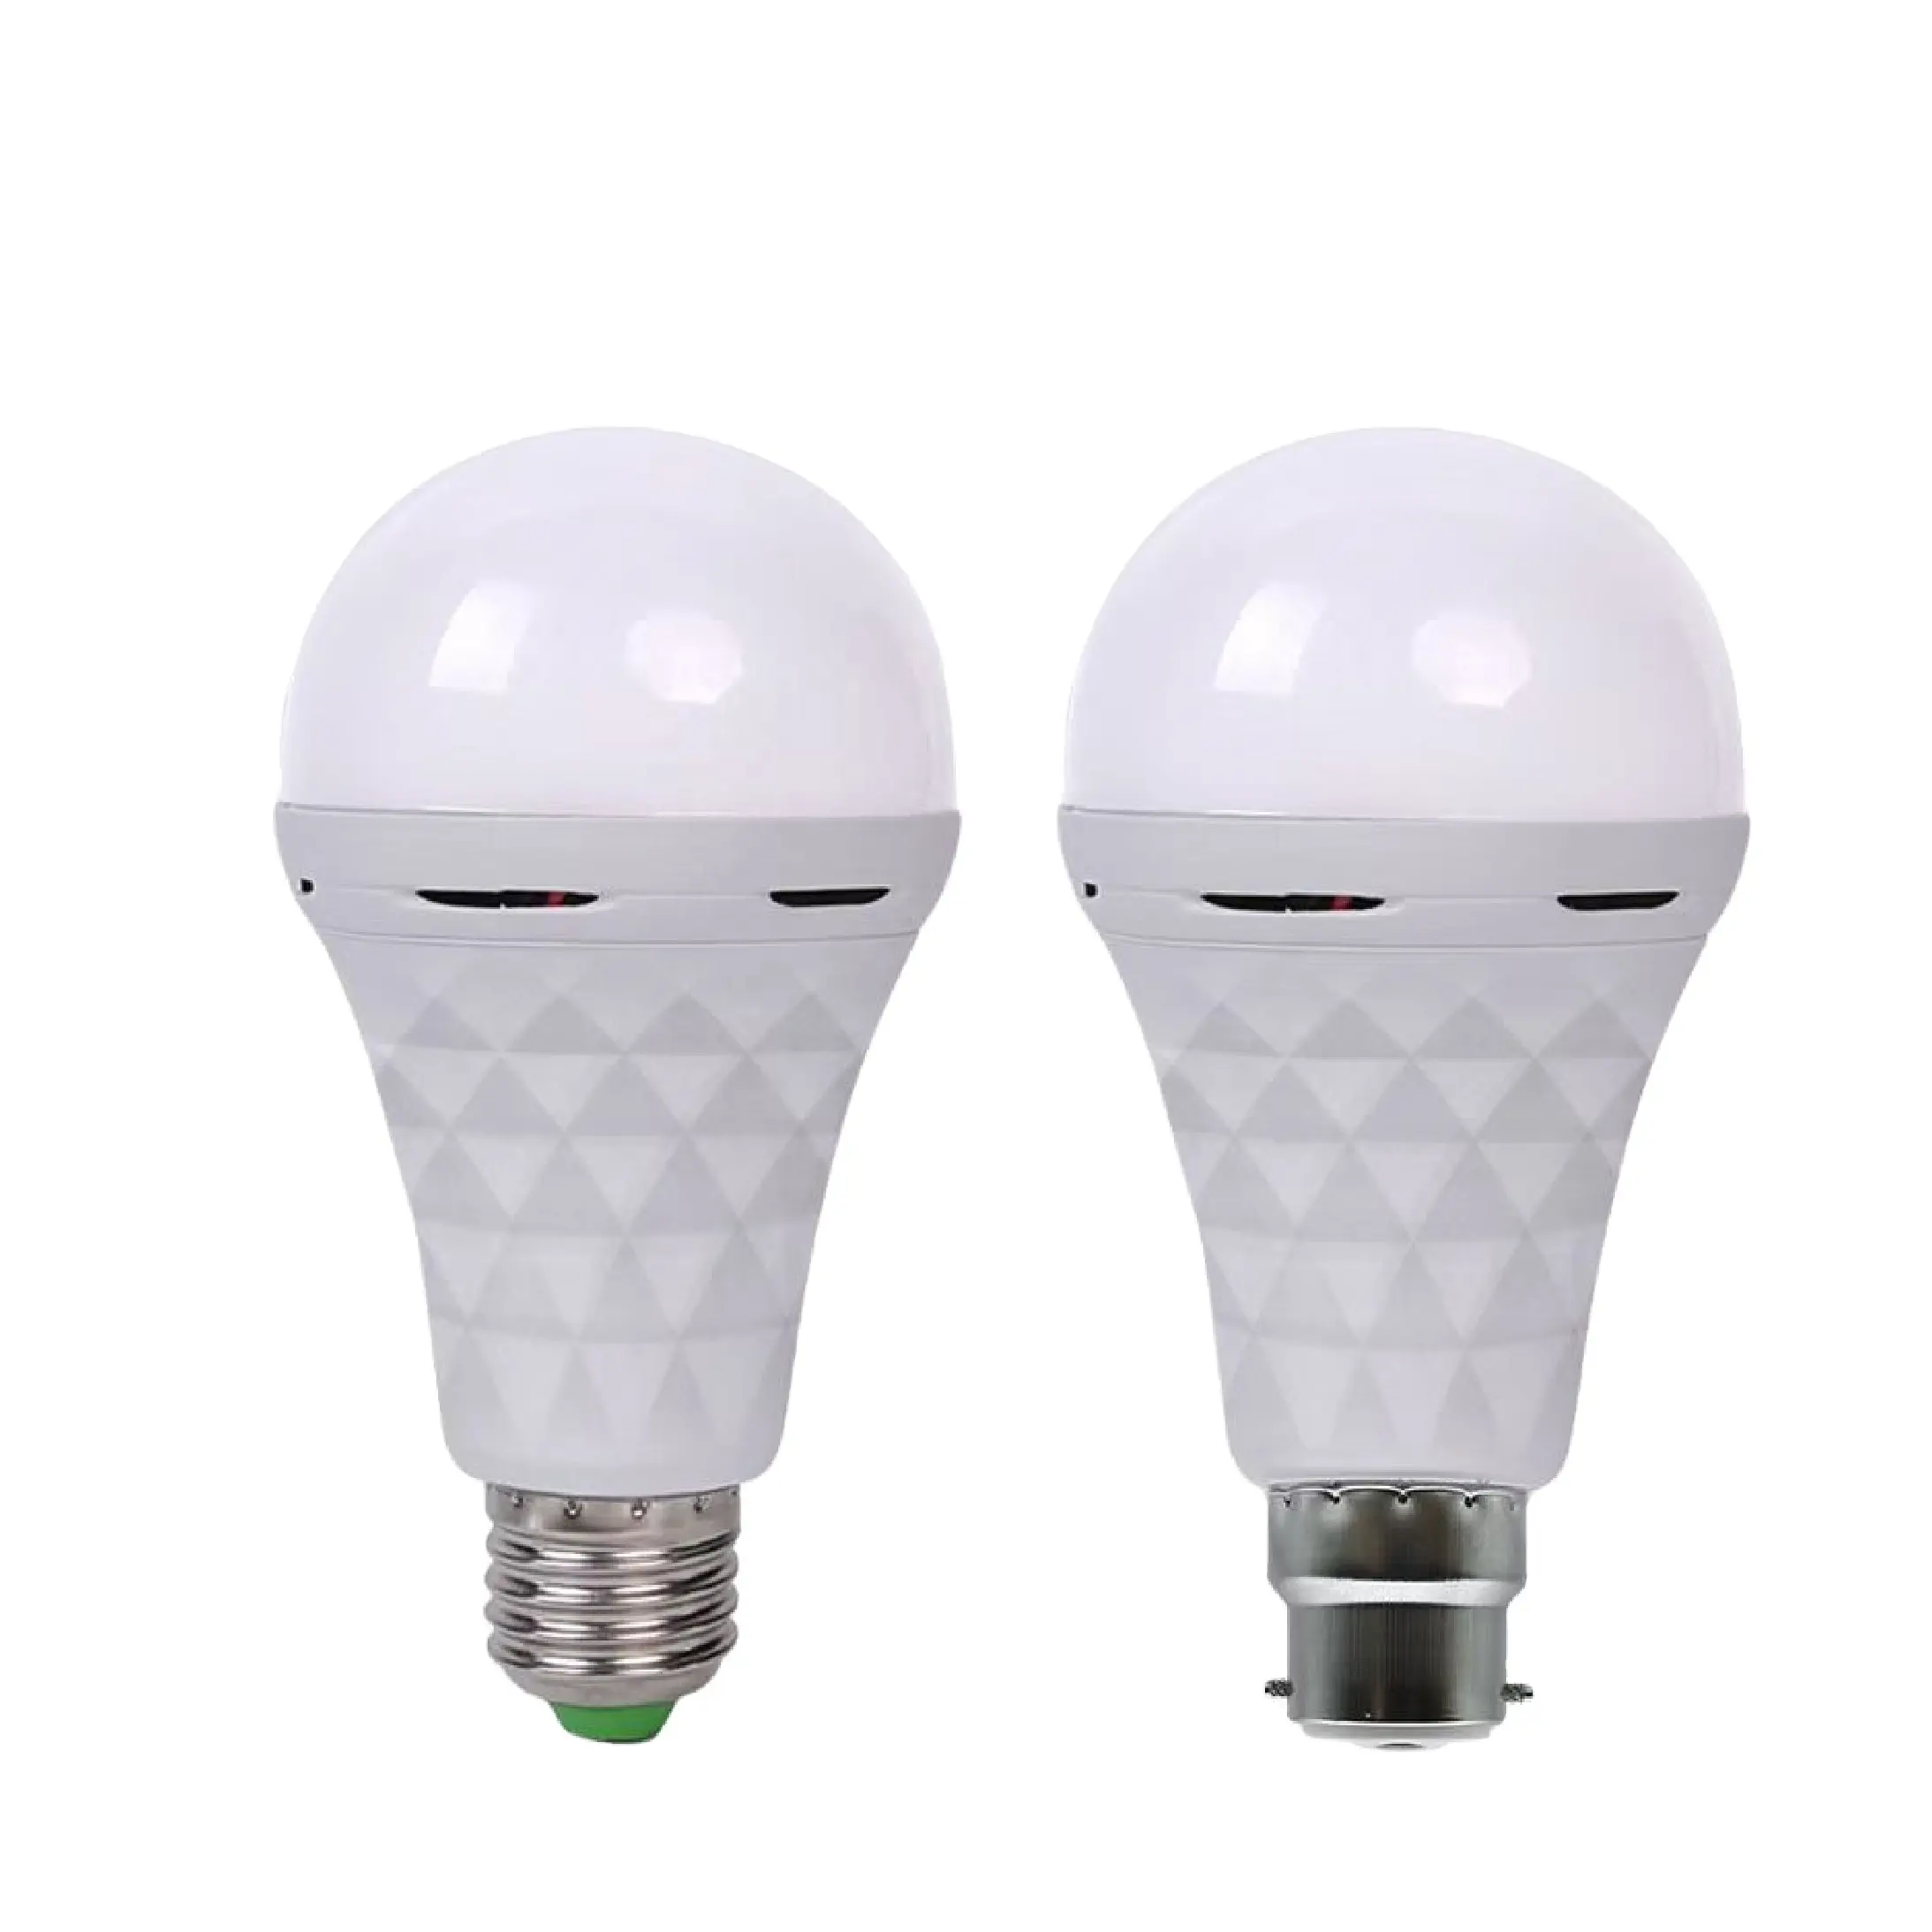 Built-in Battery Rechargeable emergency light bulb E27 B22 base 15W Energy Saving led A80 bulb , LED-A BULB